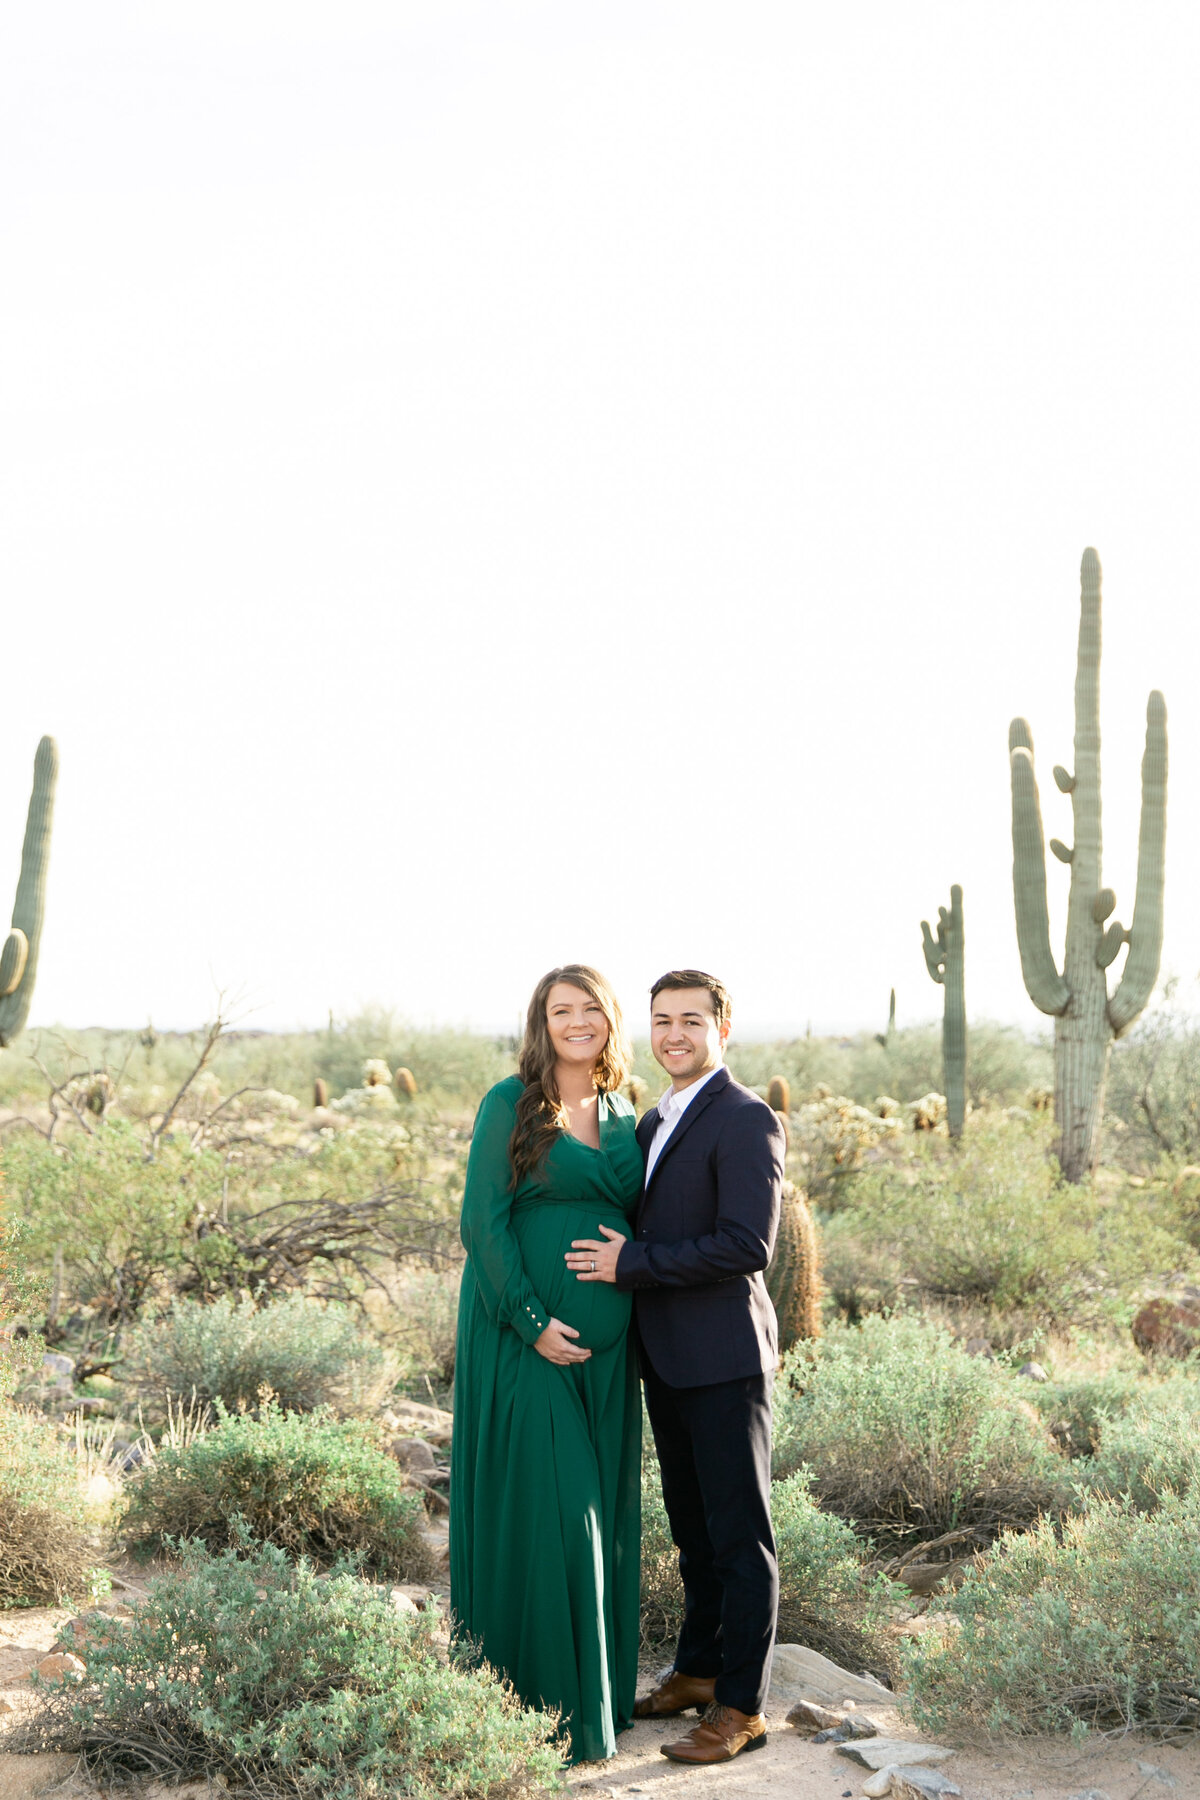 Karlie Colleen Photography - Scottsdale Arizona - Maternity Photos - Shelby & Cris-9